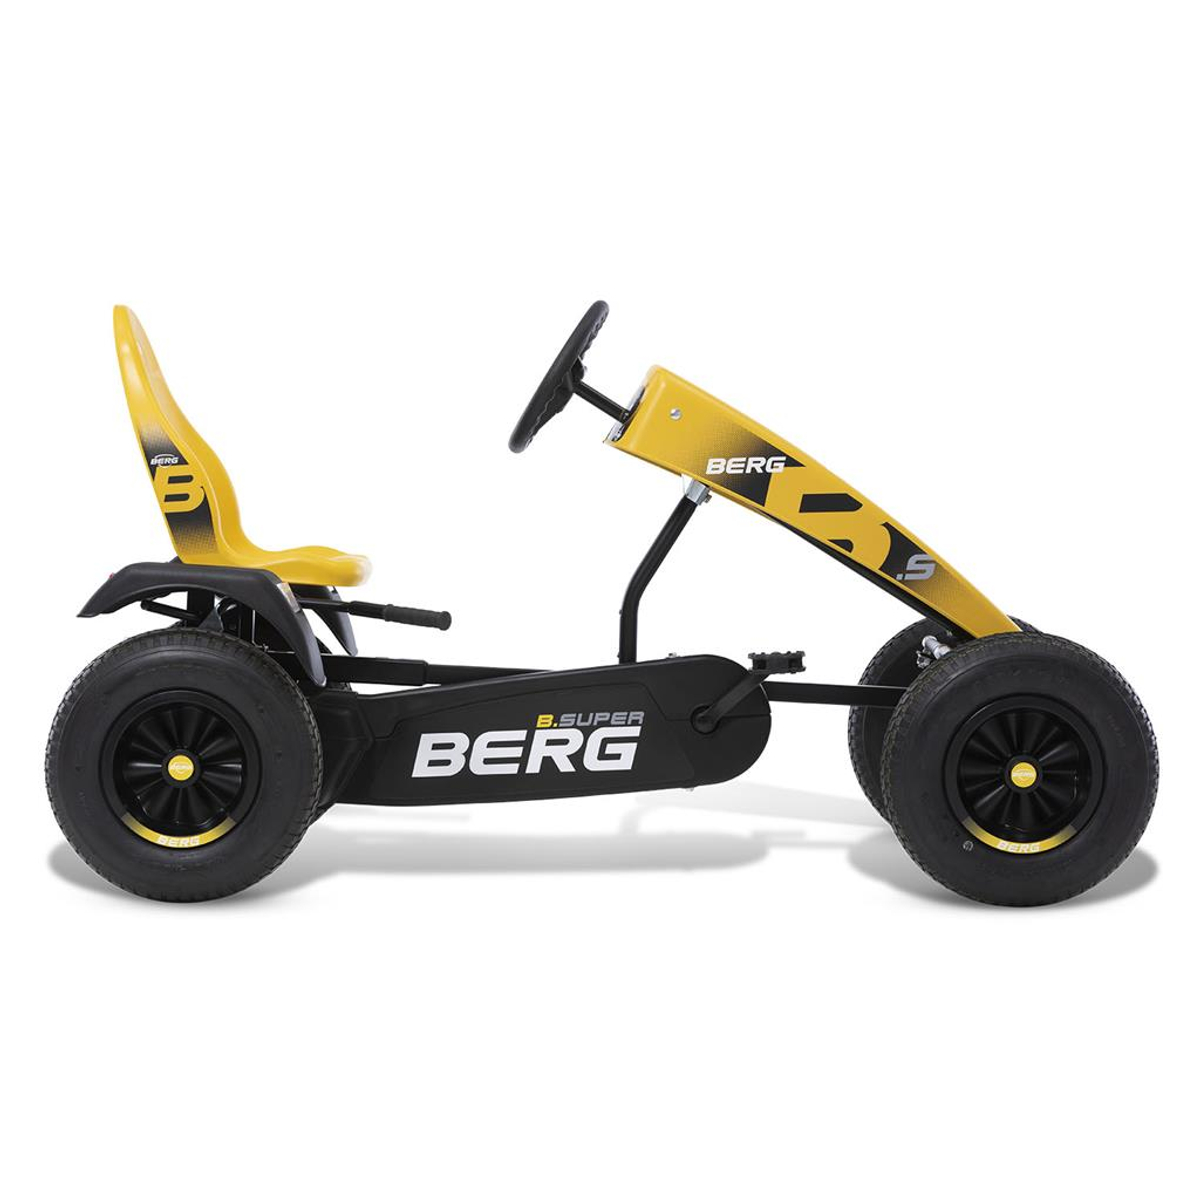 BERG Skelter XL B.Super yellow BFR